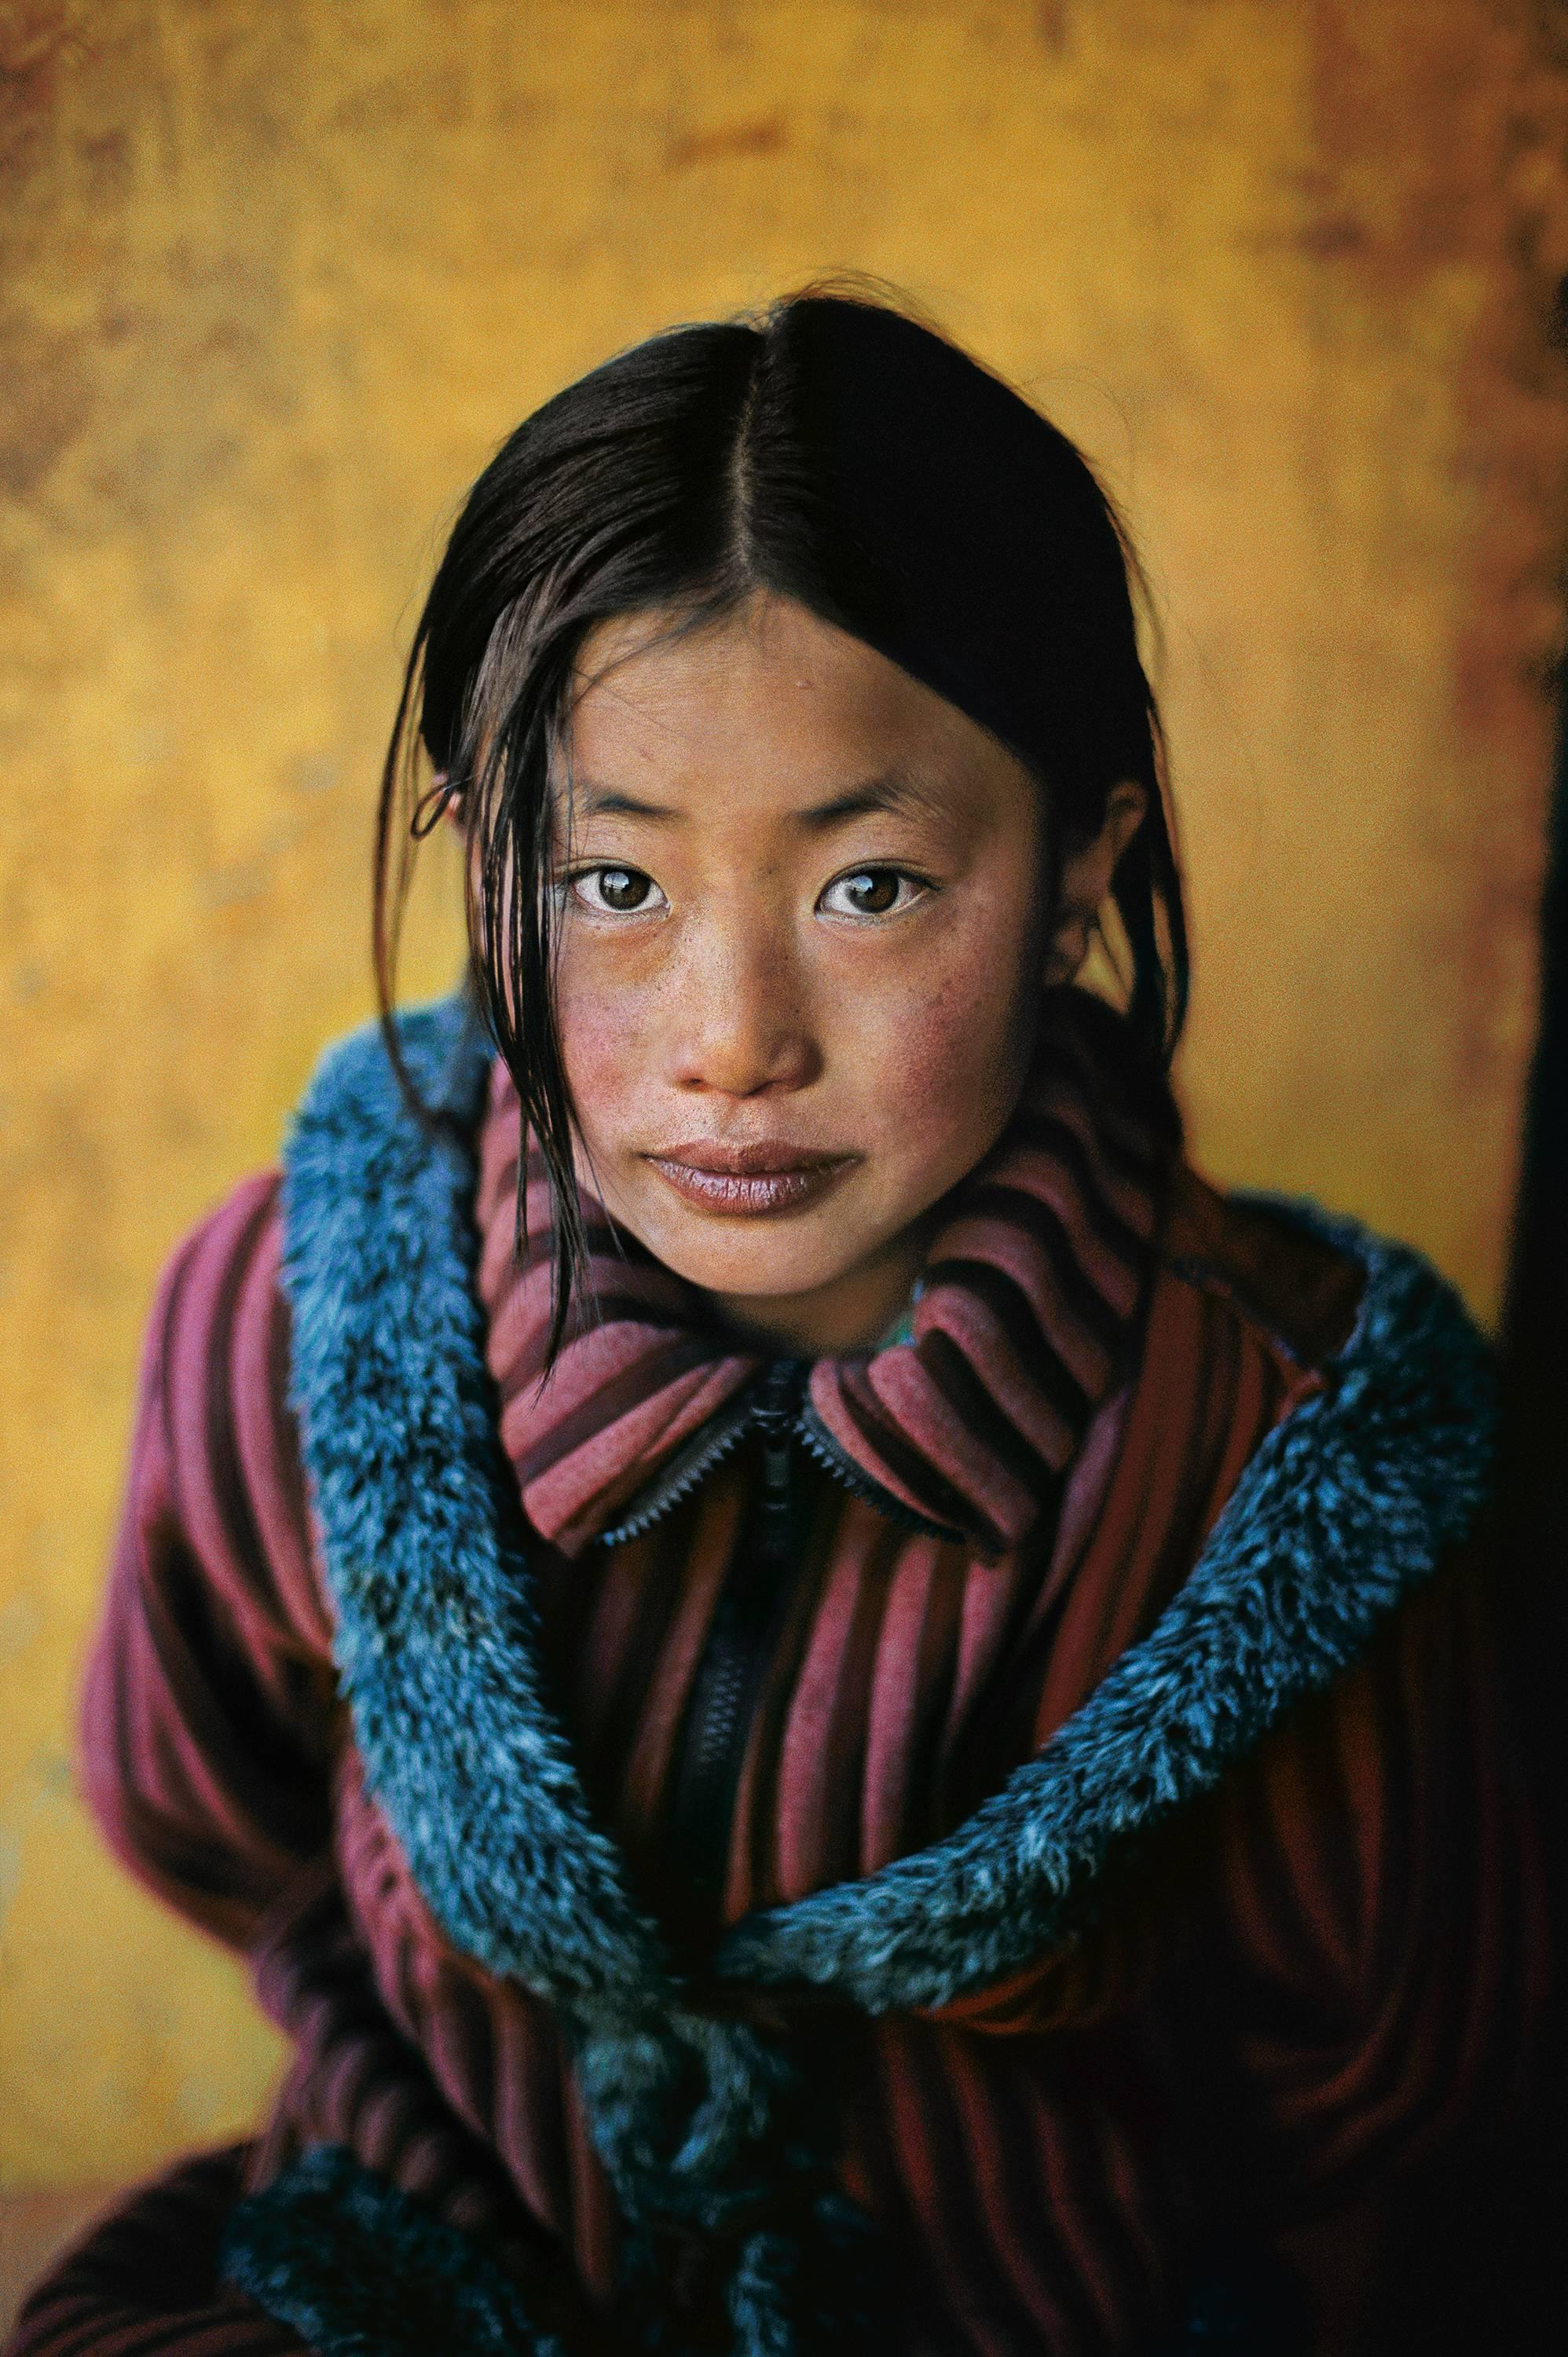 Girl in New Coat, Xigaze, Tibet, 2001 - Steve McCurry (Colour Portrait)